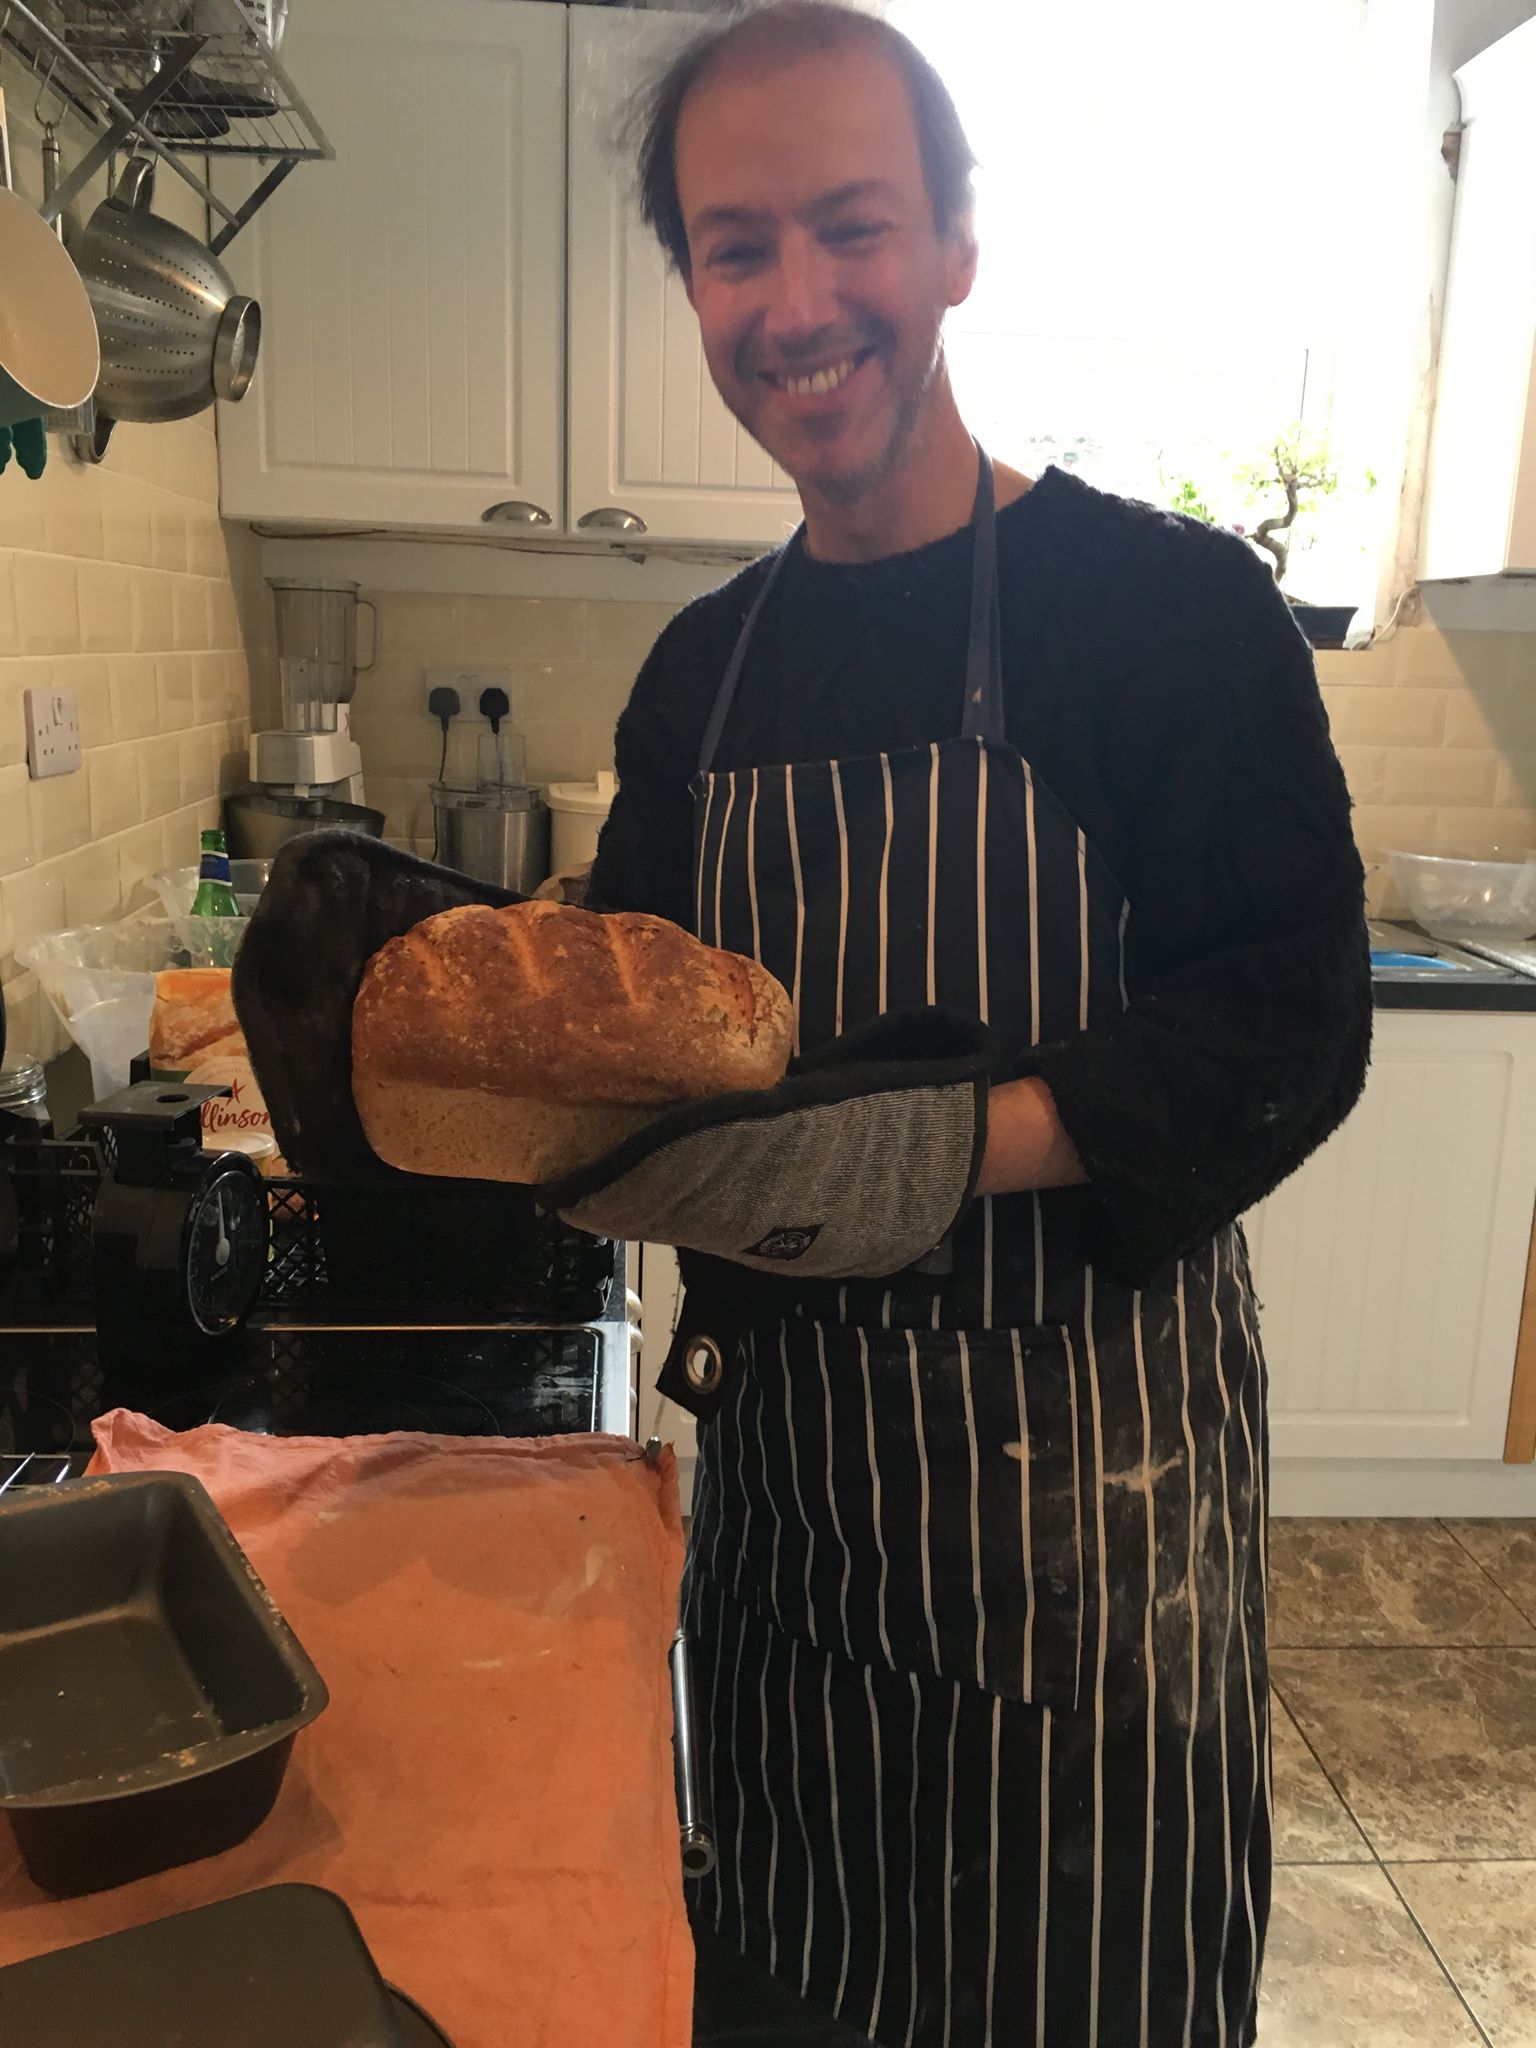 philip baking a loaf